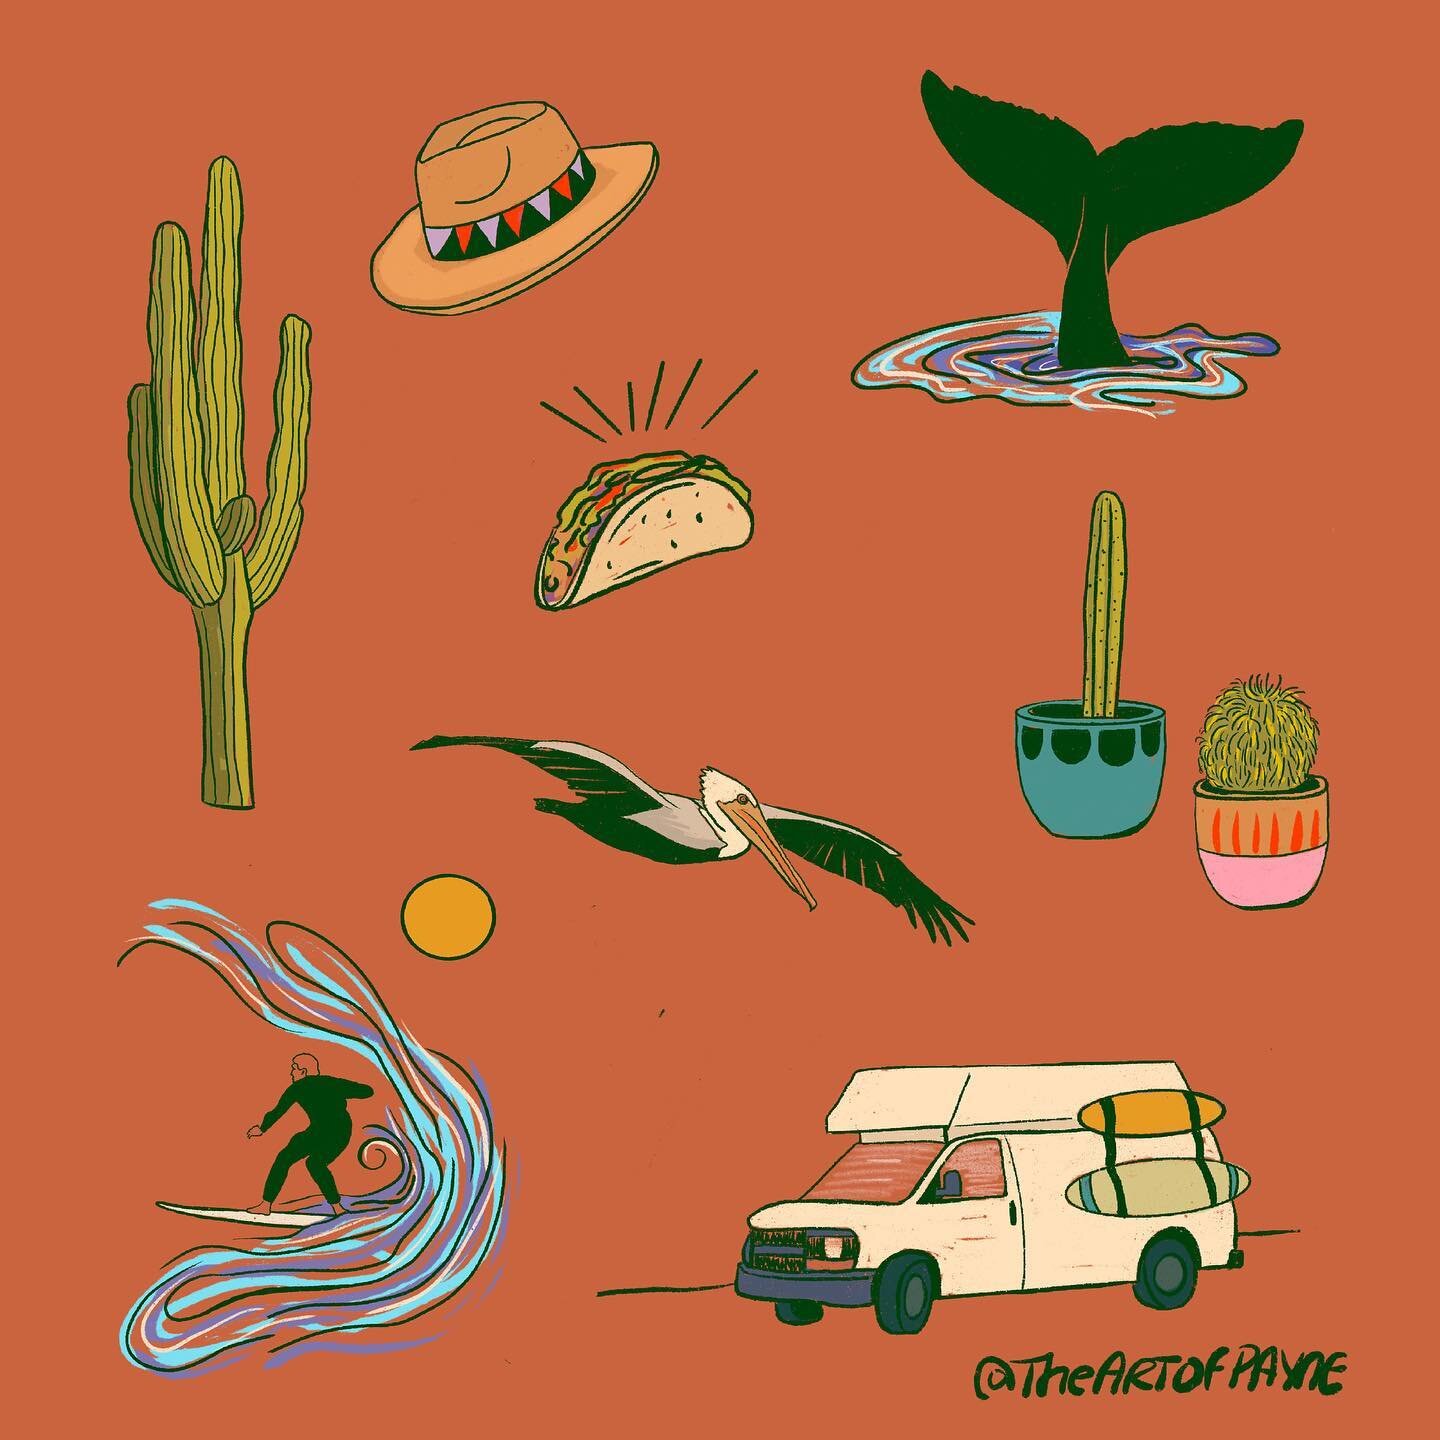 That Baja life in a nutshell 🤙🏽

Day 5 of 30 days of design 💓
.
.
.
.
.
.
.
.
#designchallenge #illustration #pattern #baja #bajacalifornia #bajasur #todossantos #mexico #digitalart #designinspiration #desertlife #desertvibes #desertart #cactus #s